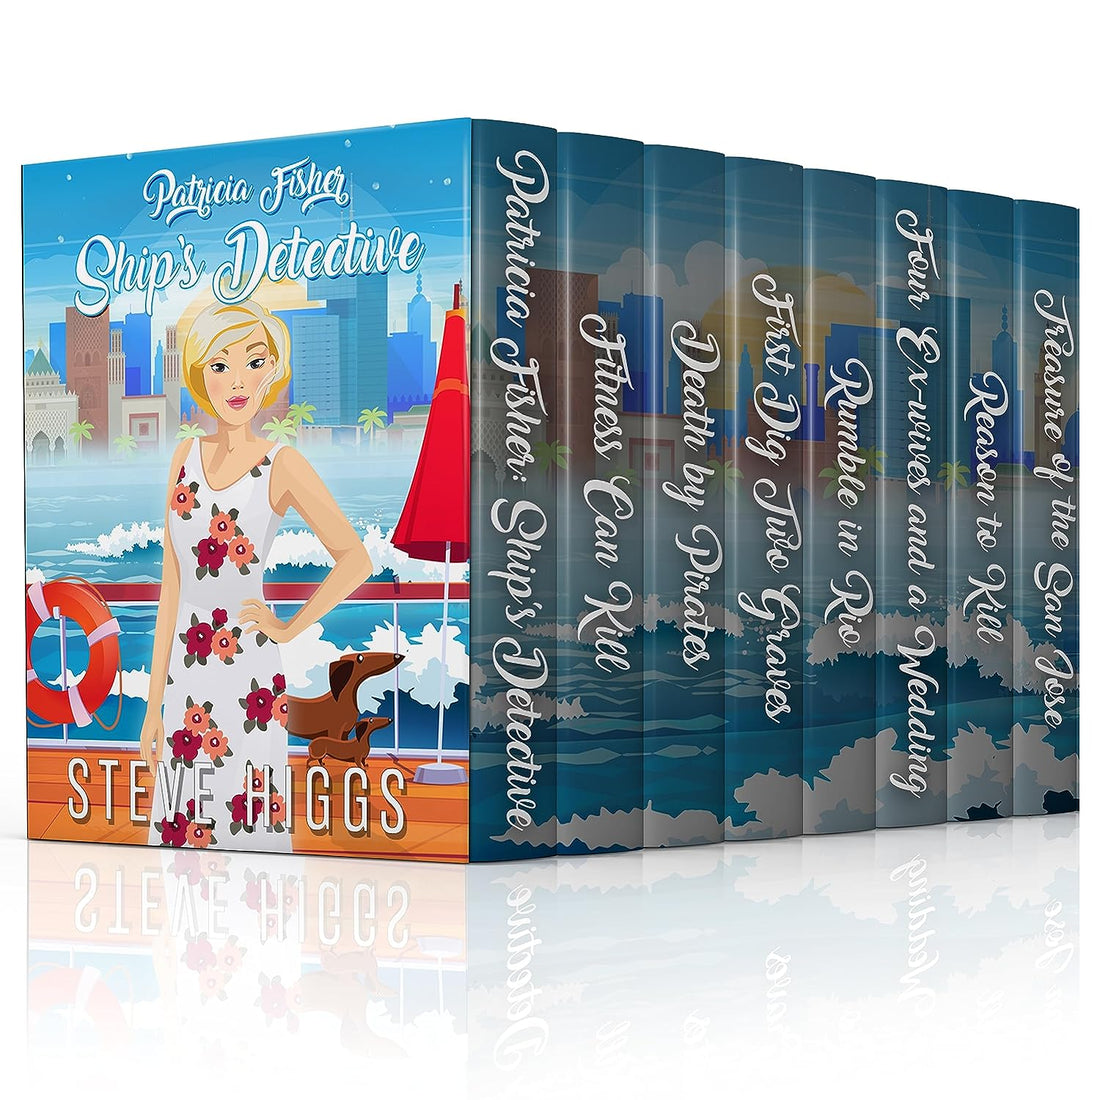 Patricia Fisher Ship's Detective; Series 3; Books 1-8